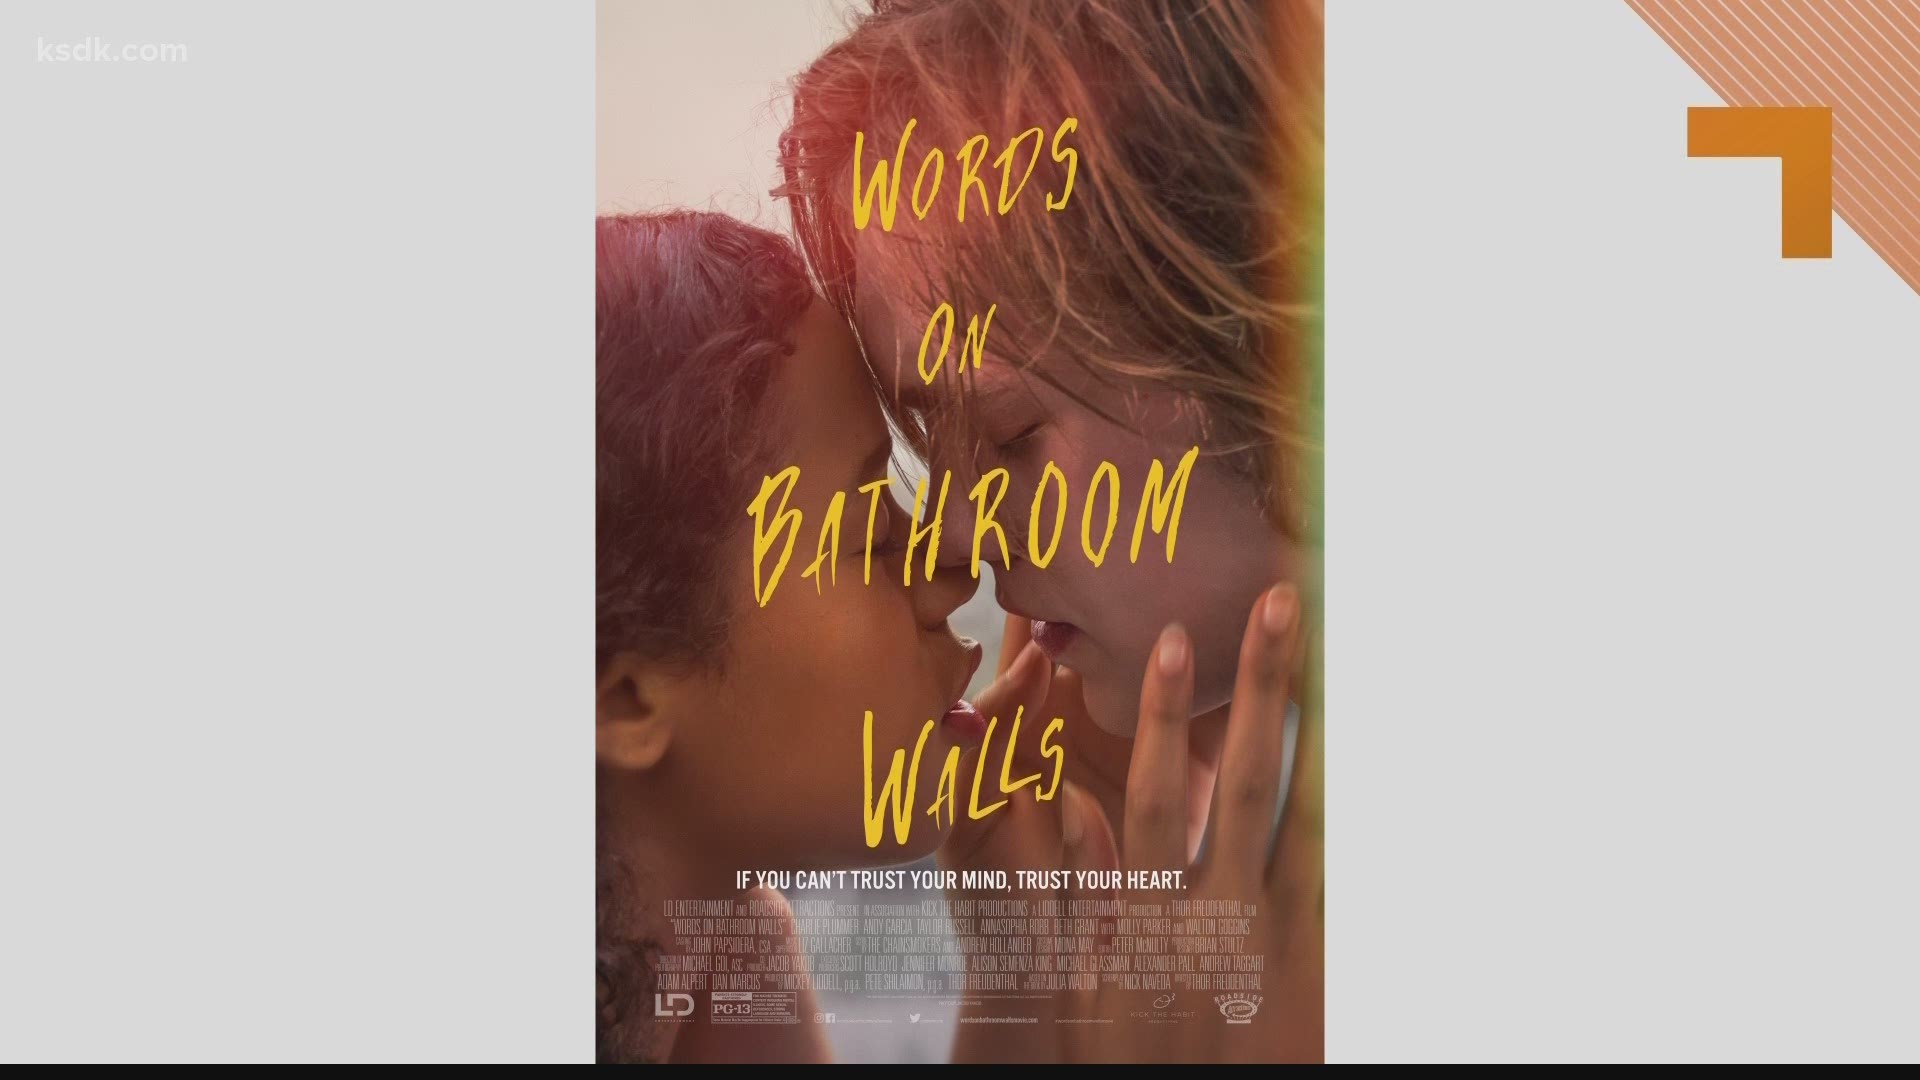 KSDK Film Critic Dan Buffa and Associate Producer Lexi Brown review ‘Words on Bathroom Walls.’